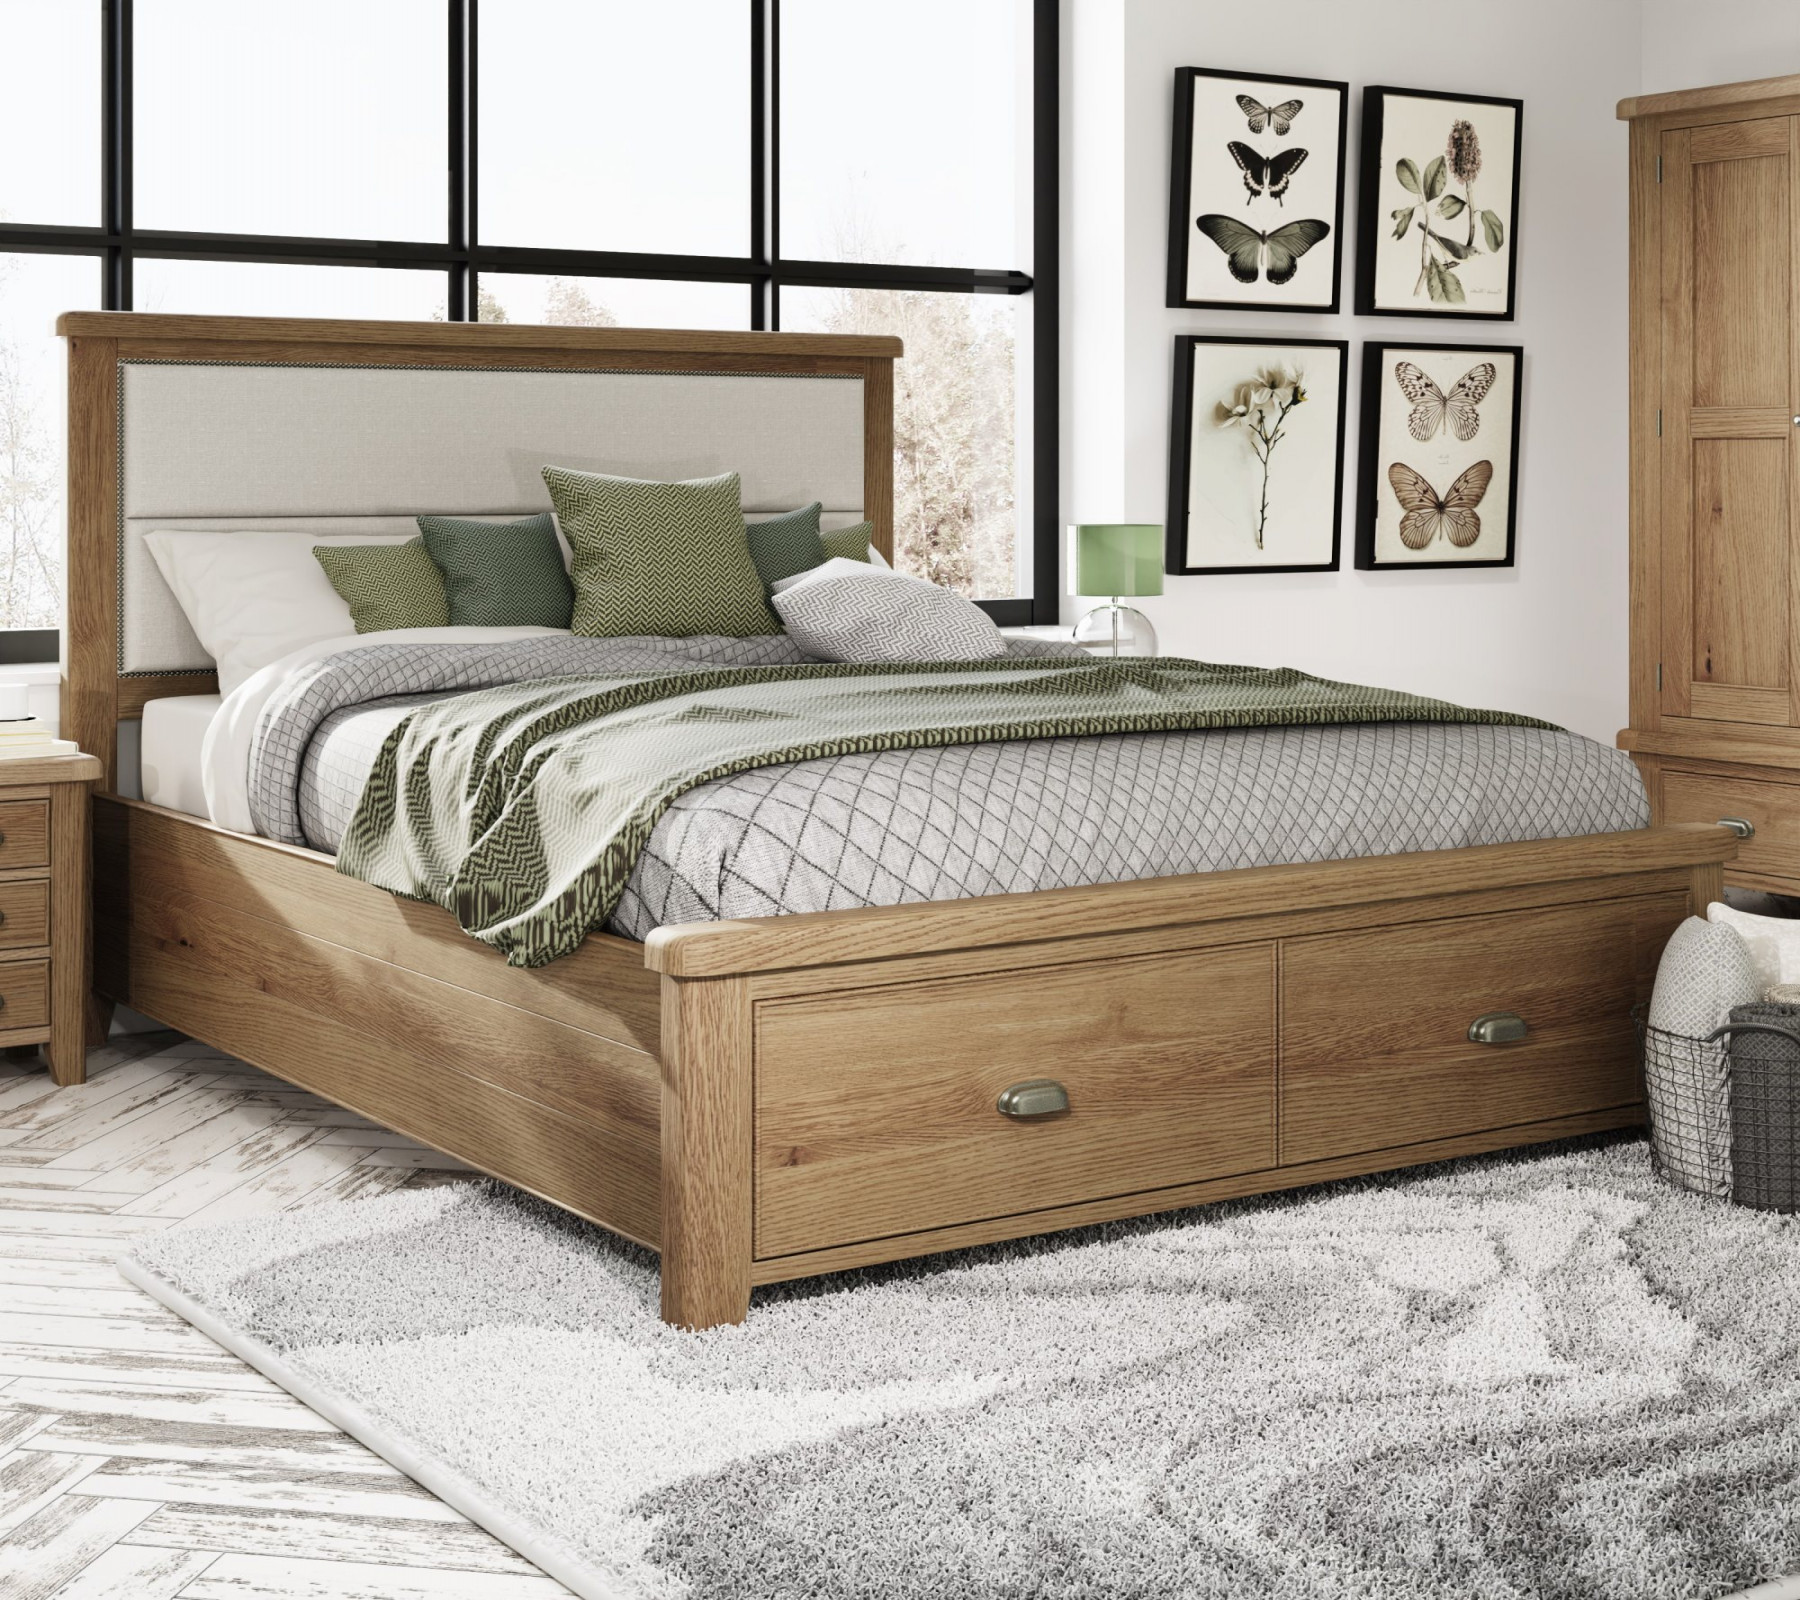 Wooden Bed Frame King Size